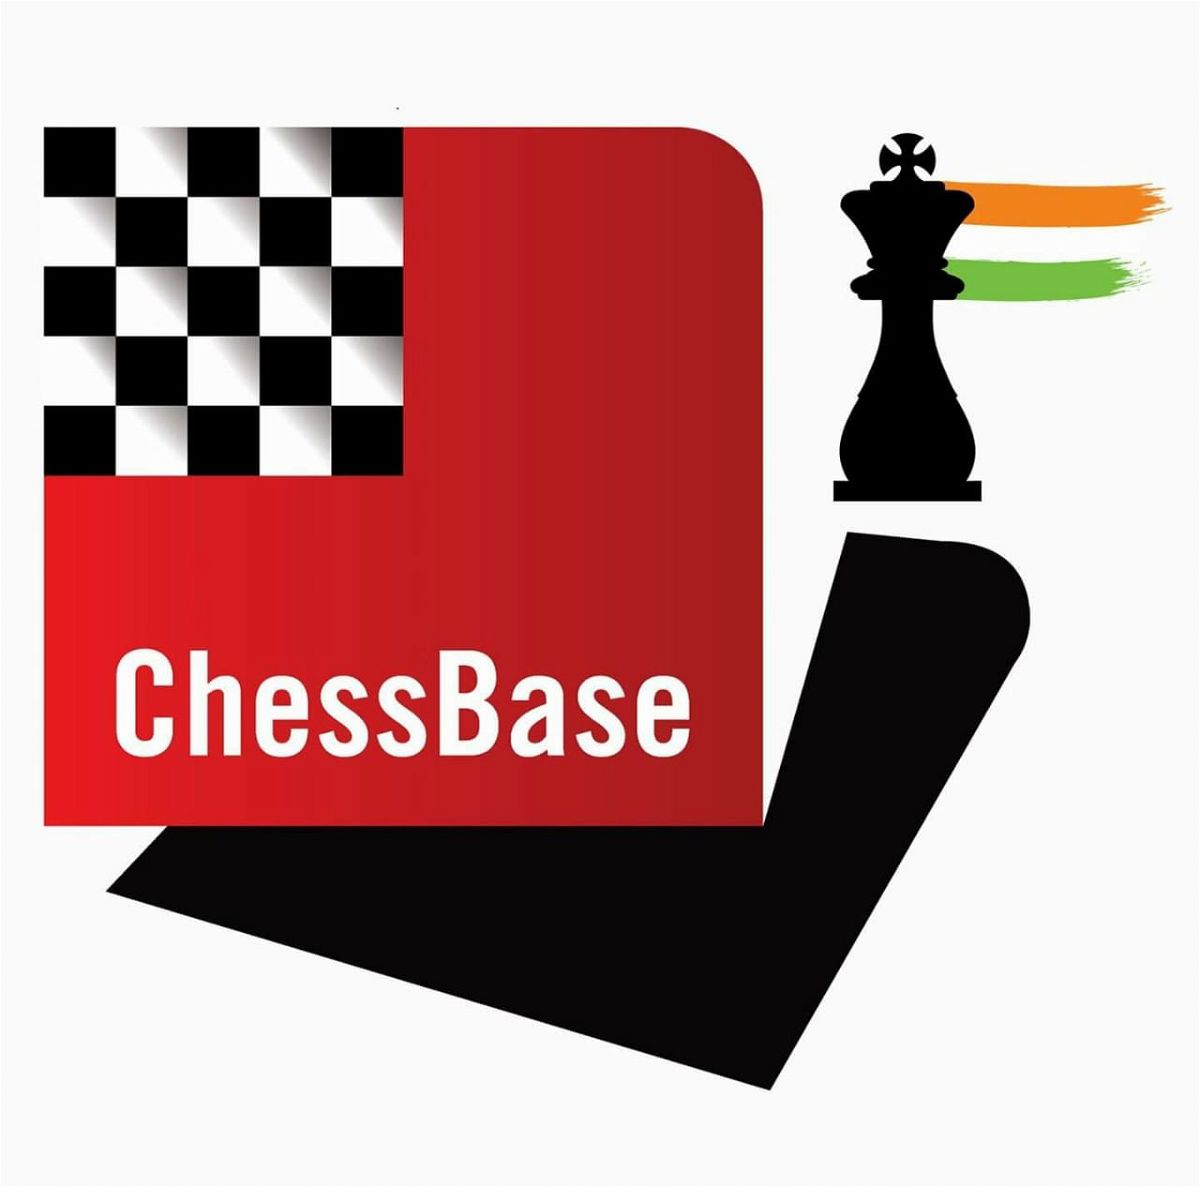 Xadrez, Chessbase 17 E Mega Database 2023 Em Português!